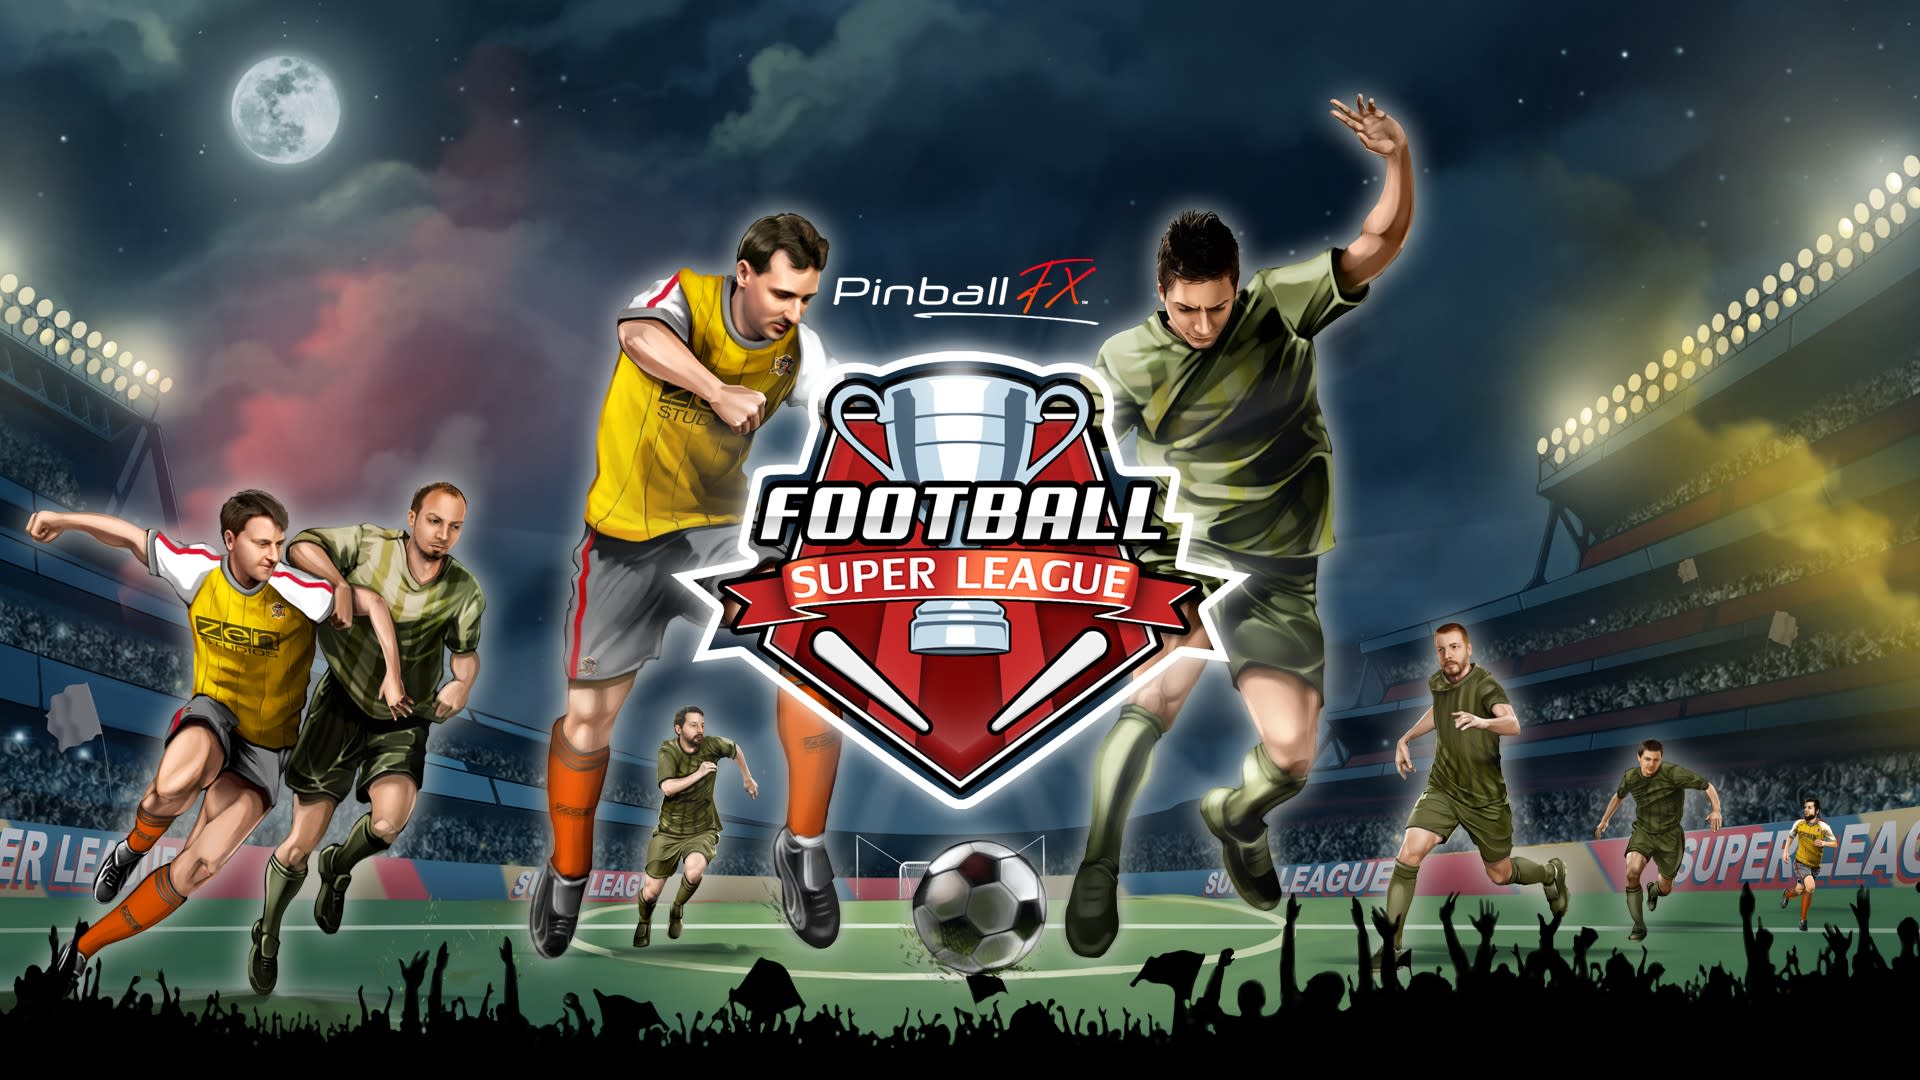 Pinball FX - Super League Football